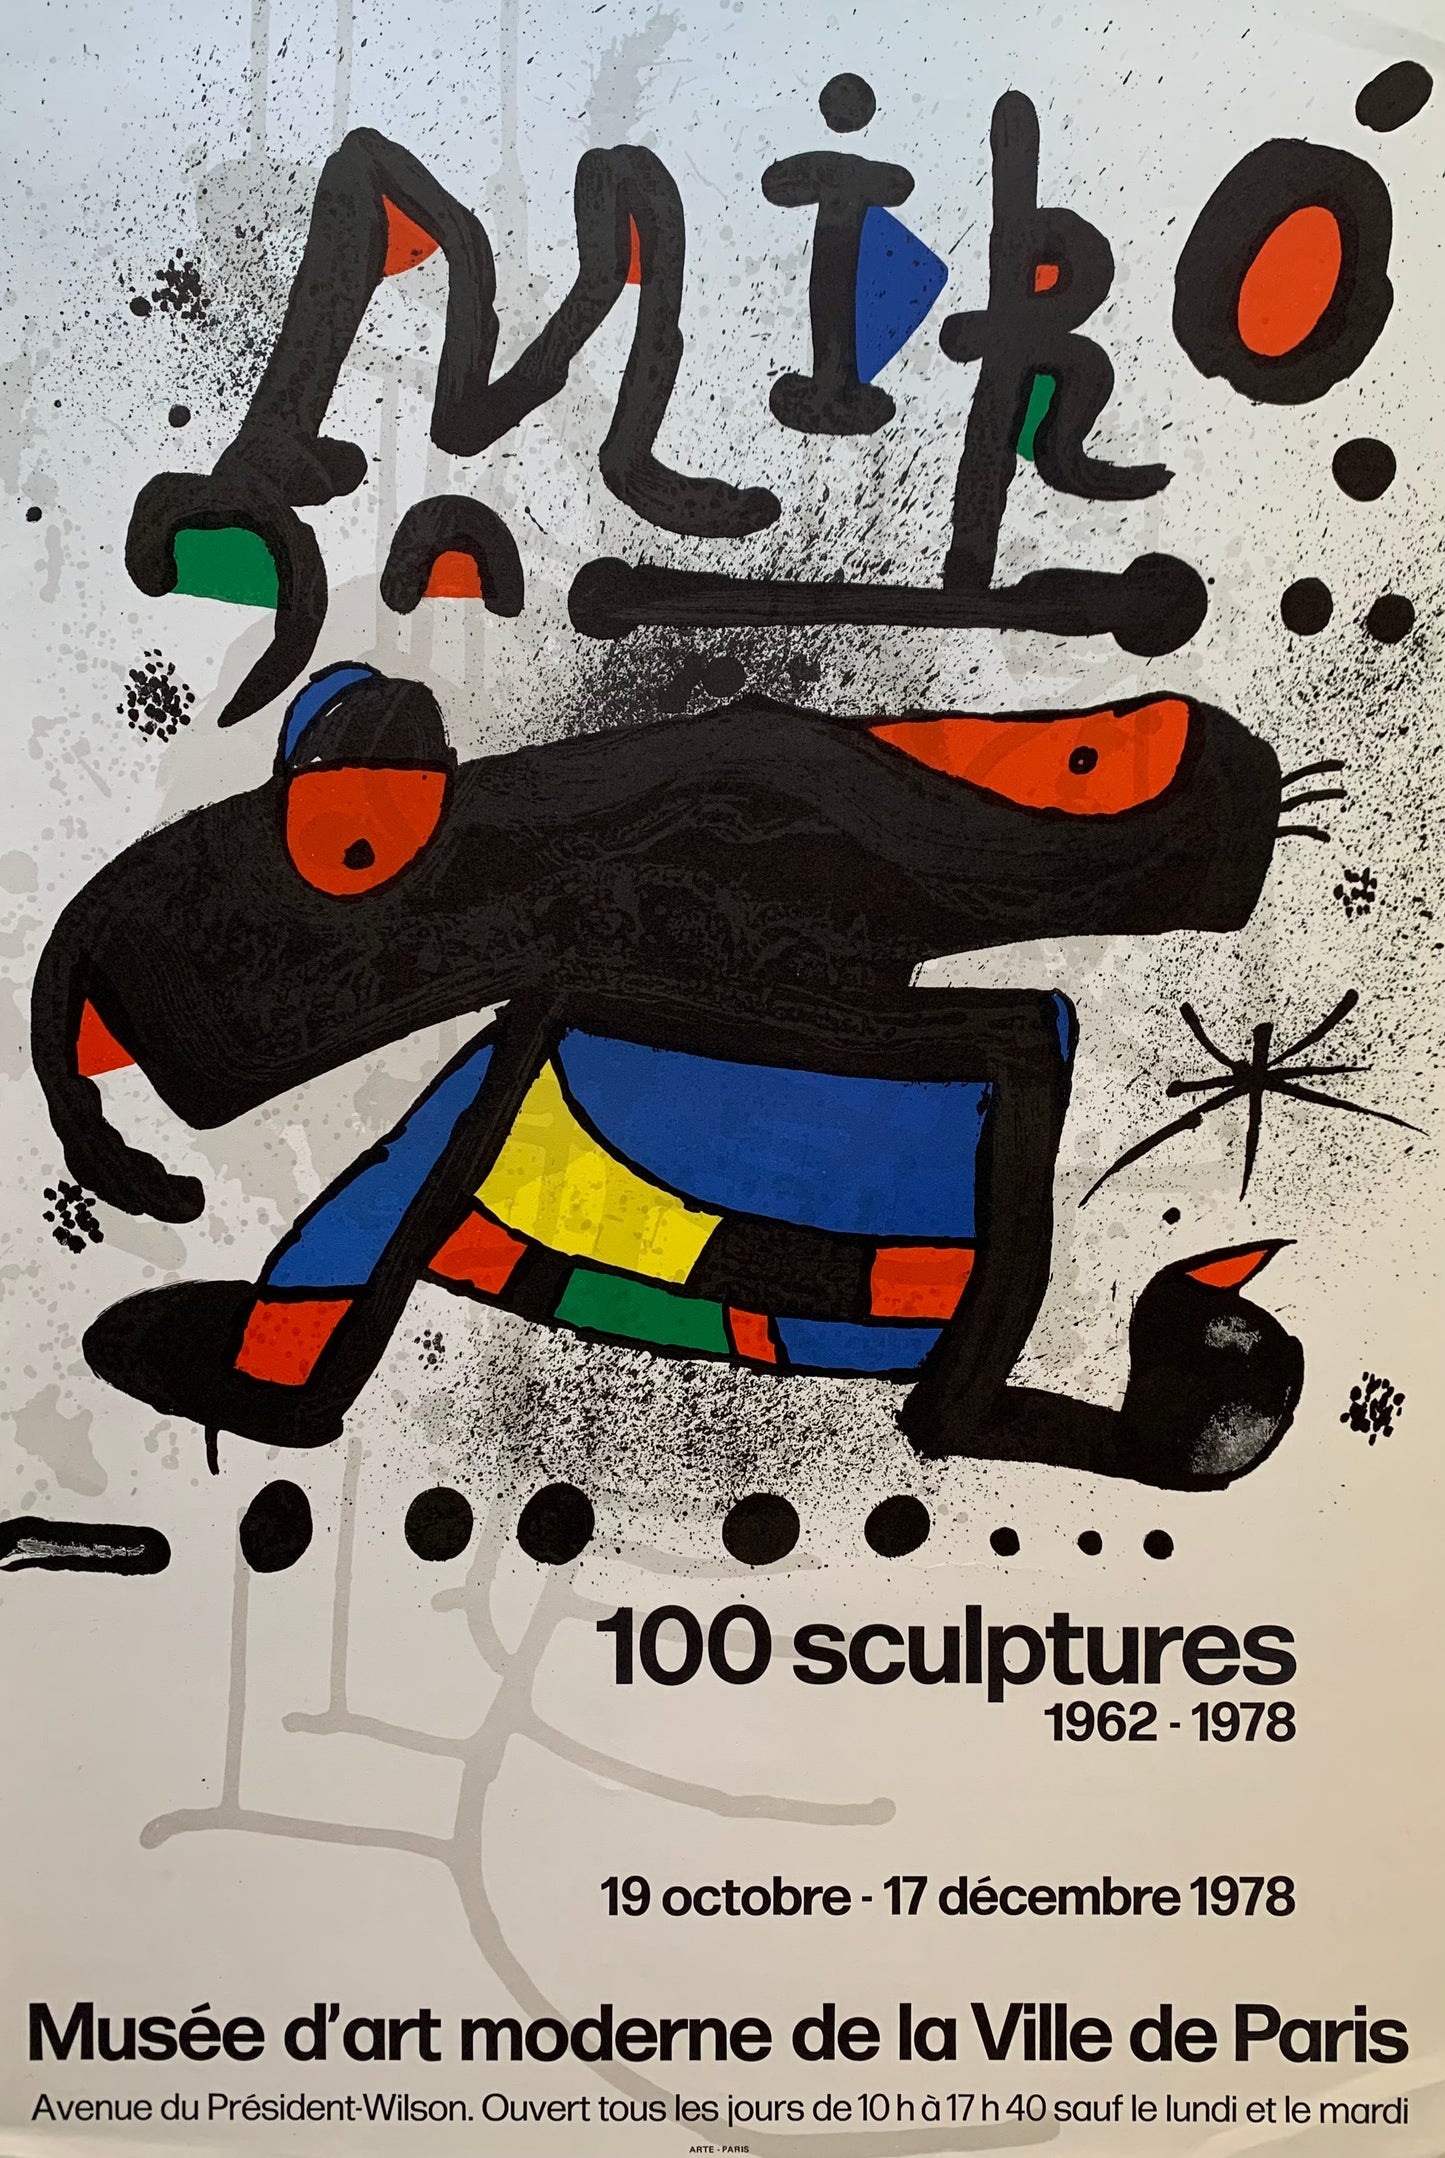 Joan Miró. "Miró, 100 sculptures", 1978